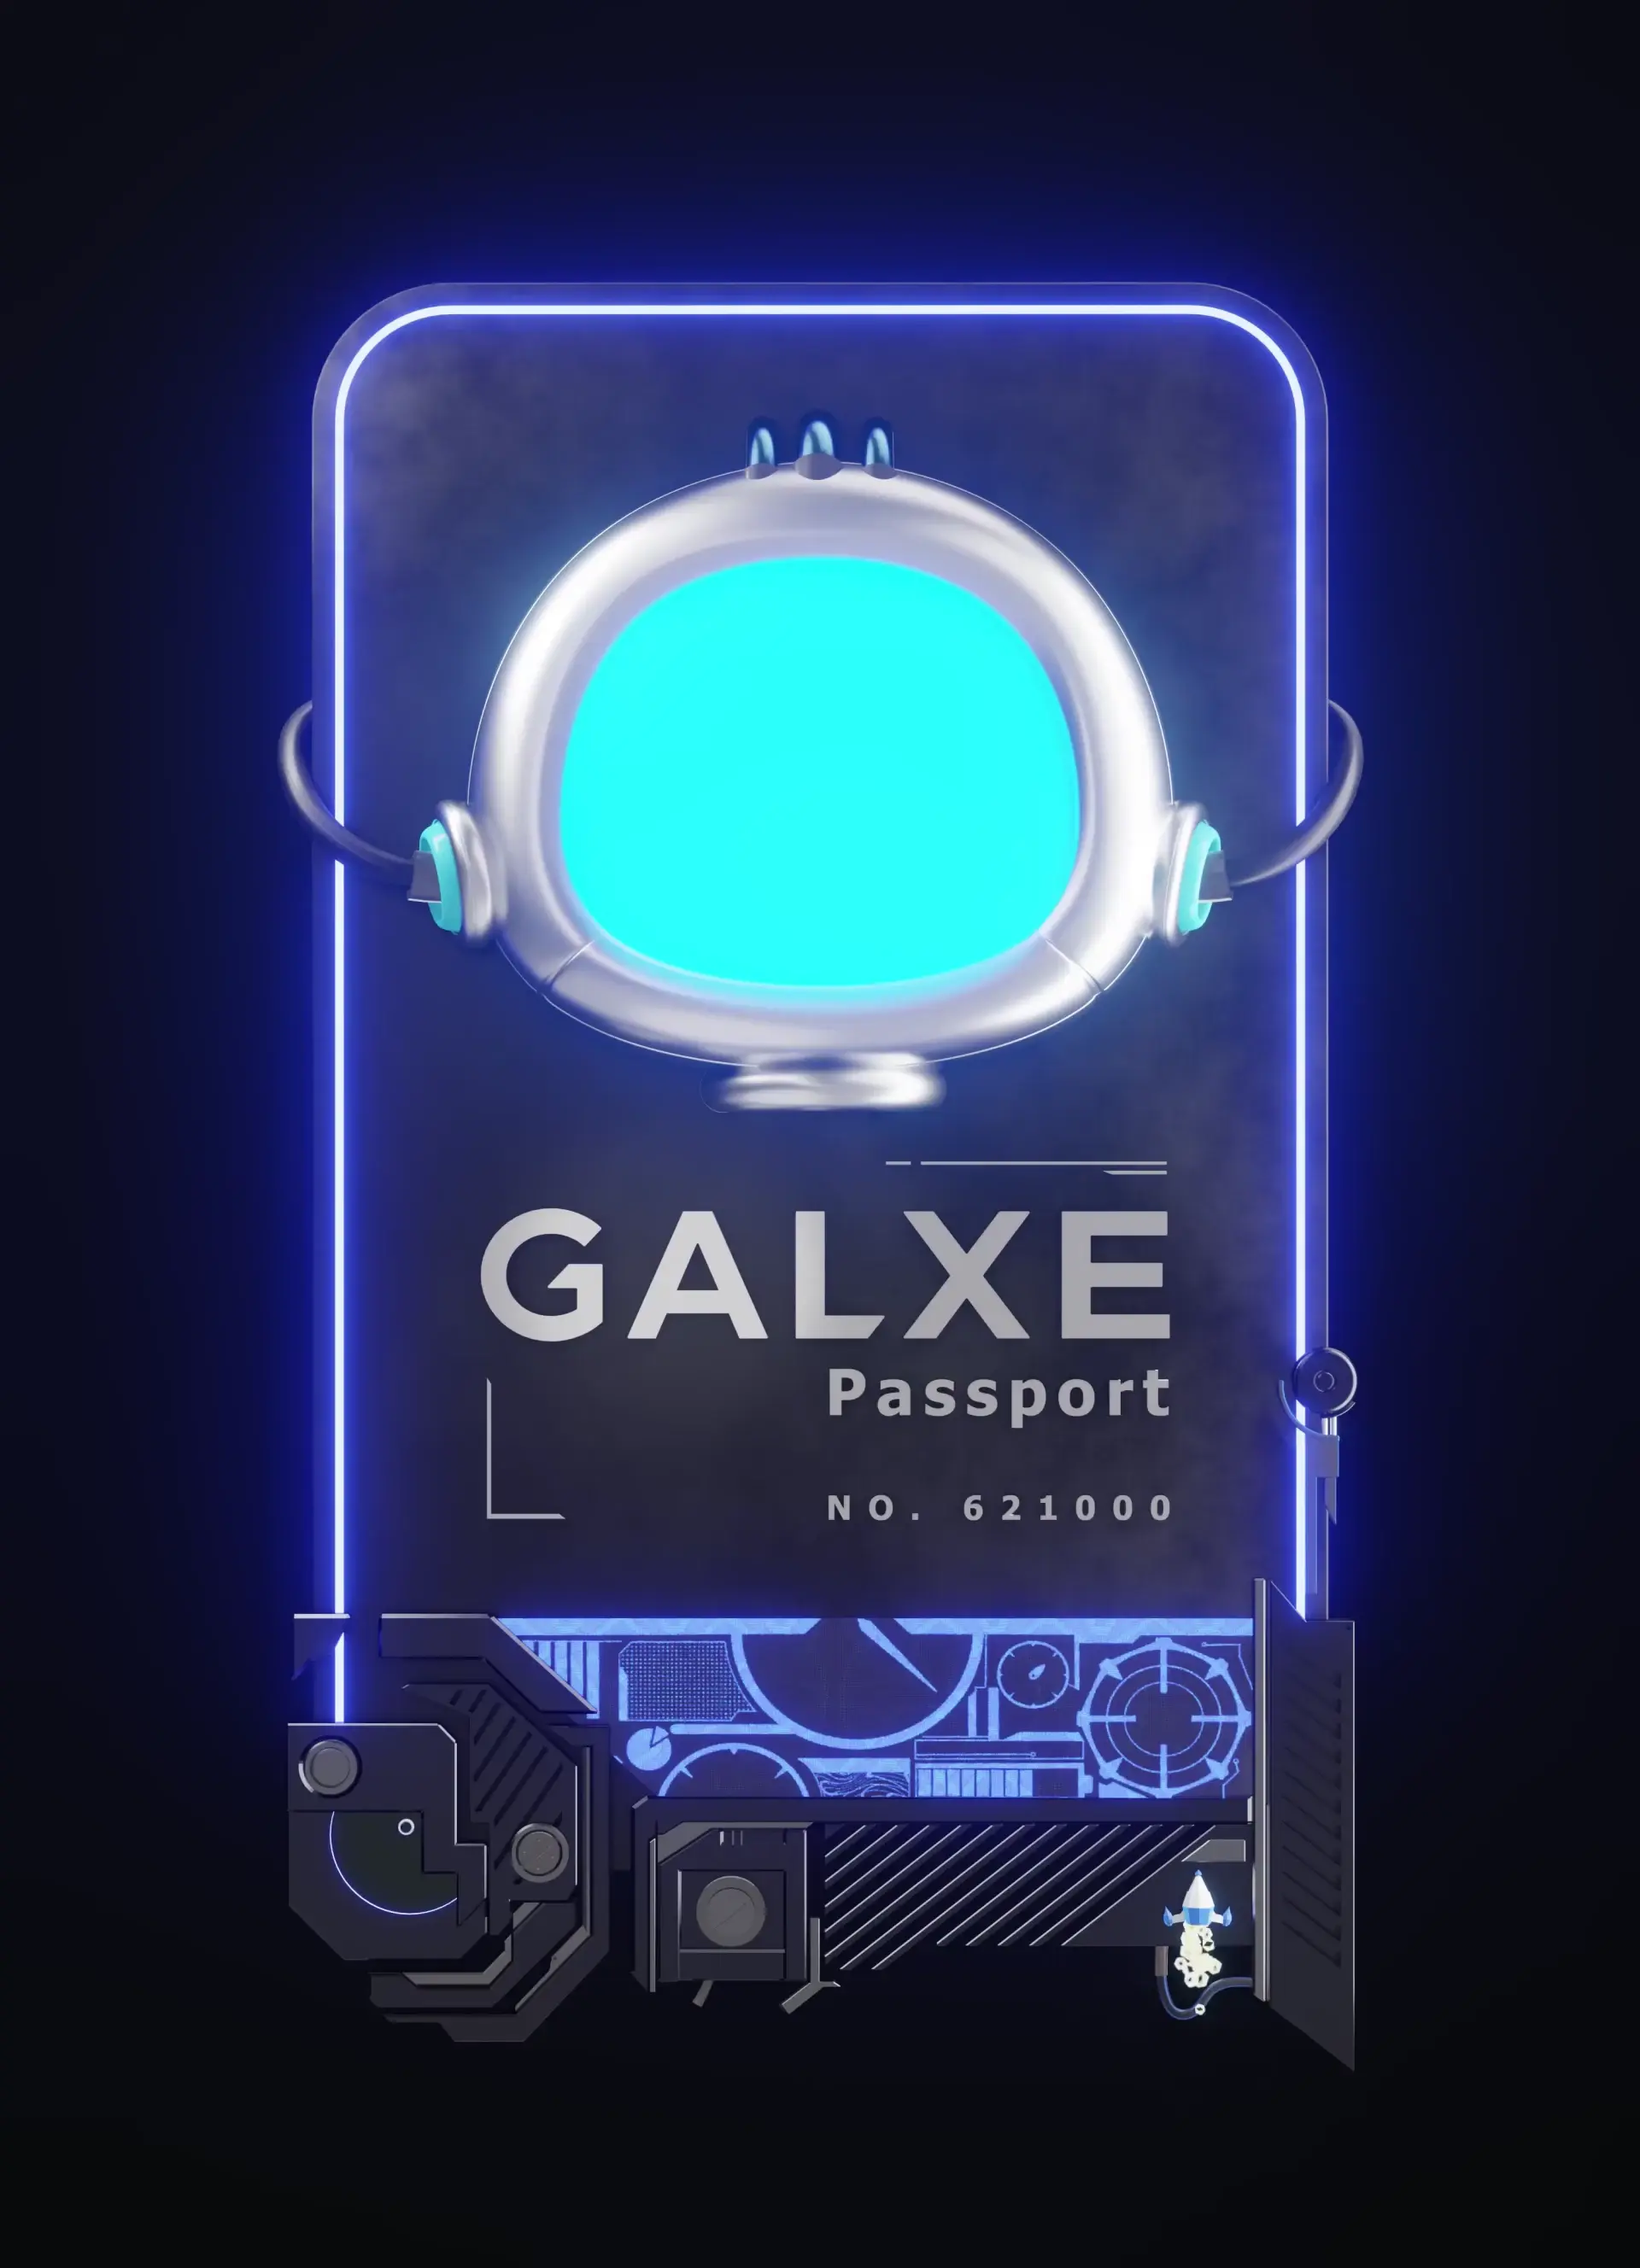 Benefits of Galxe Passport